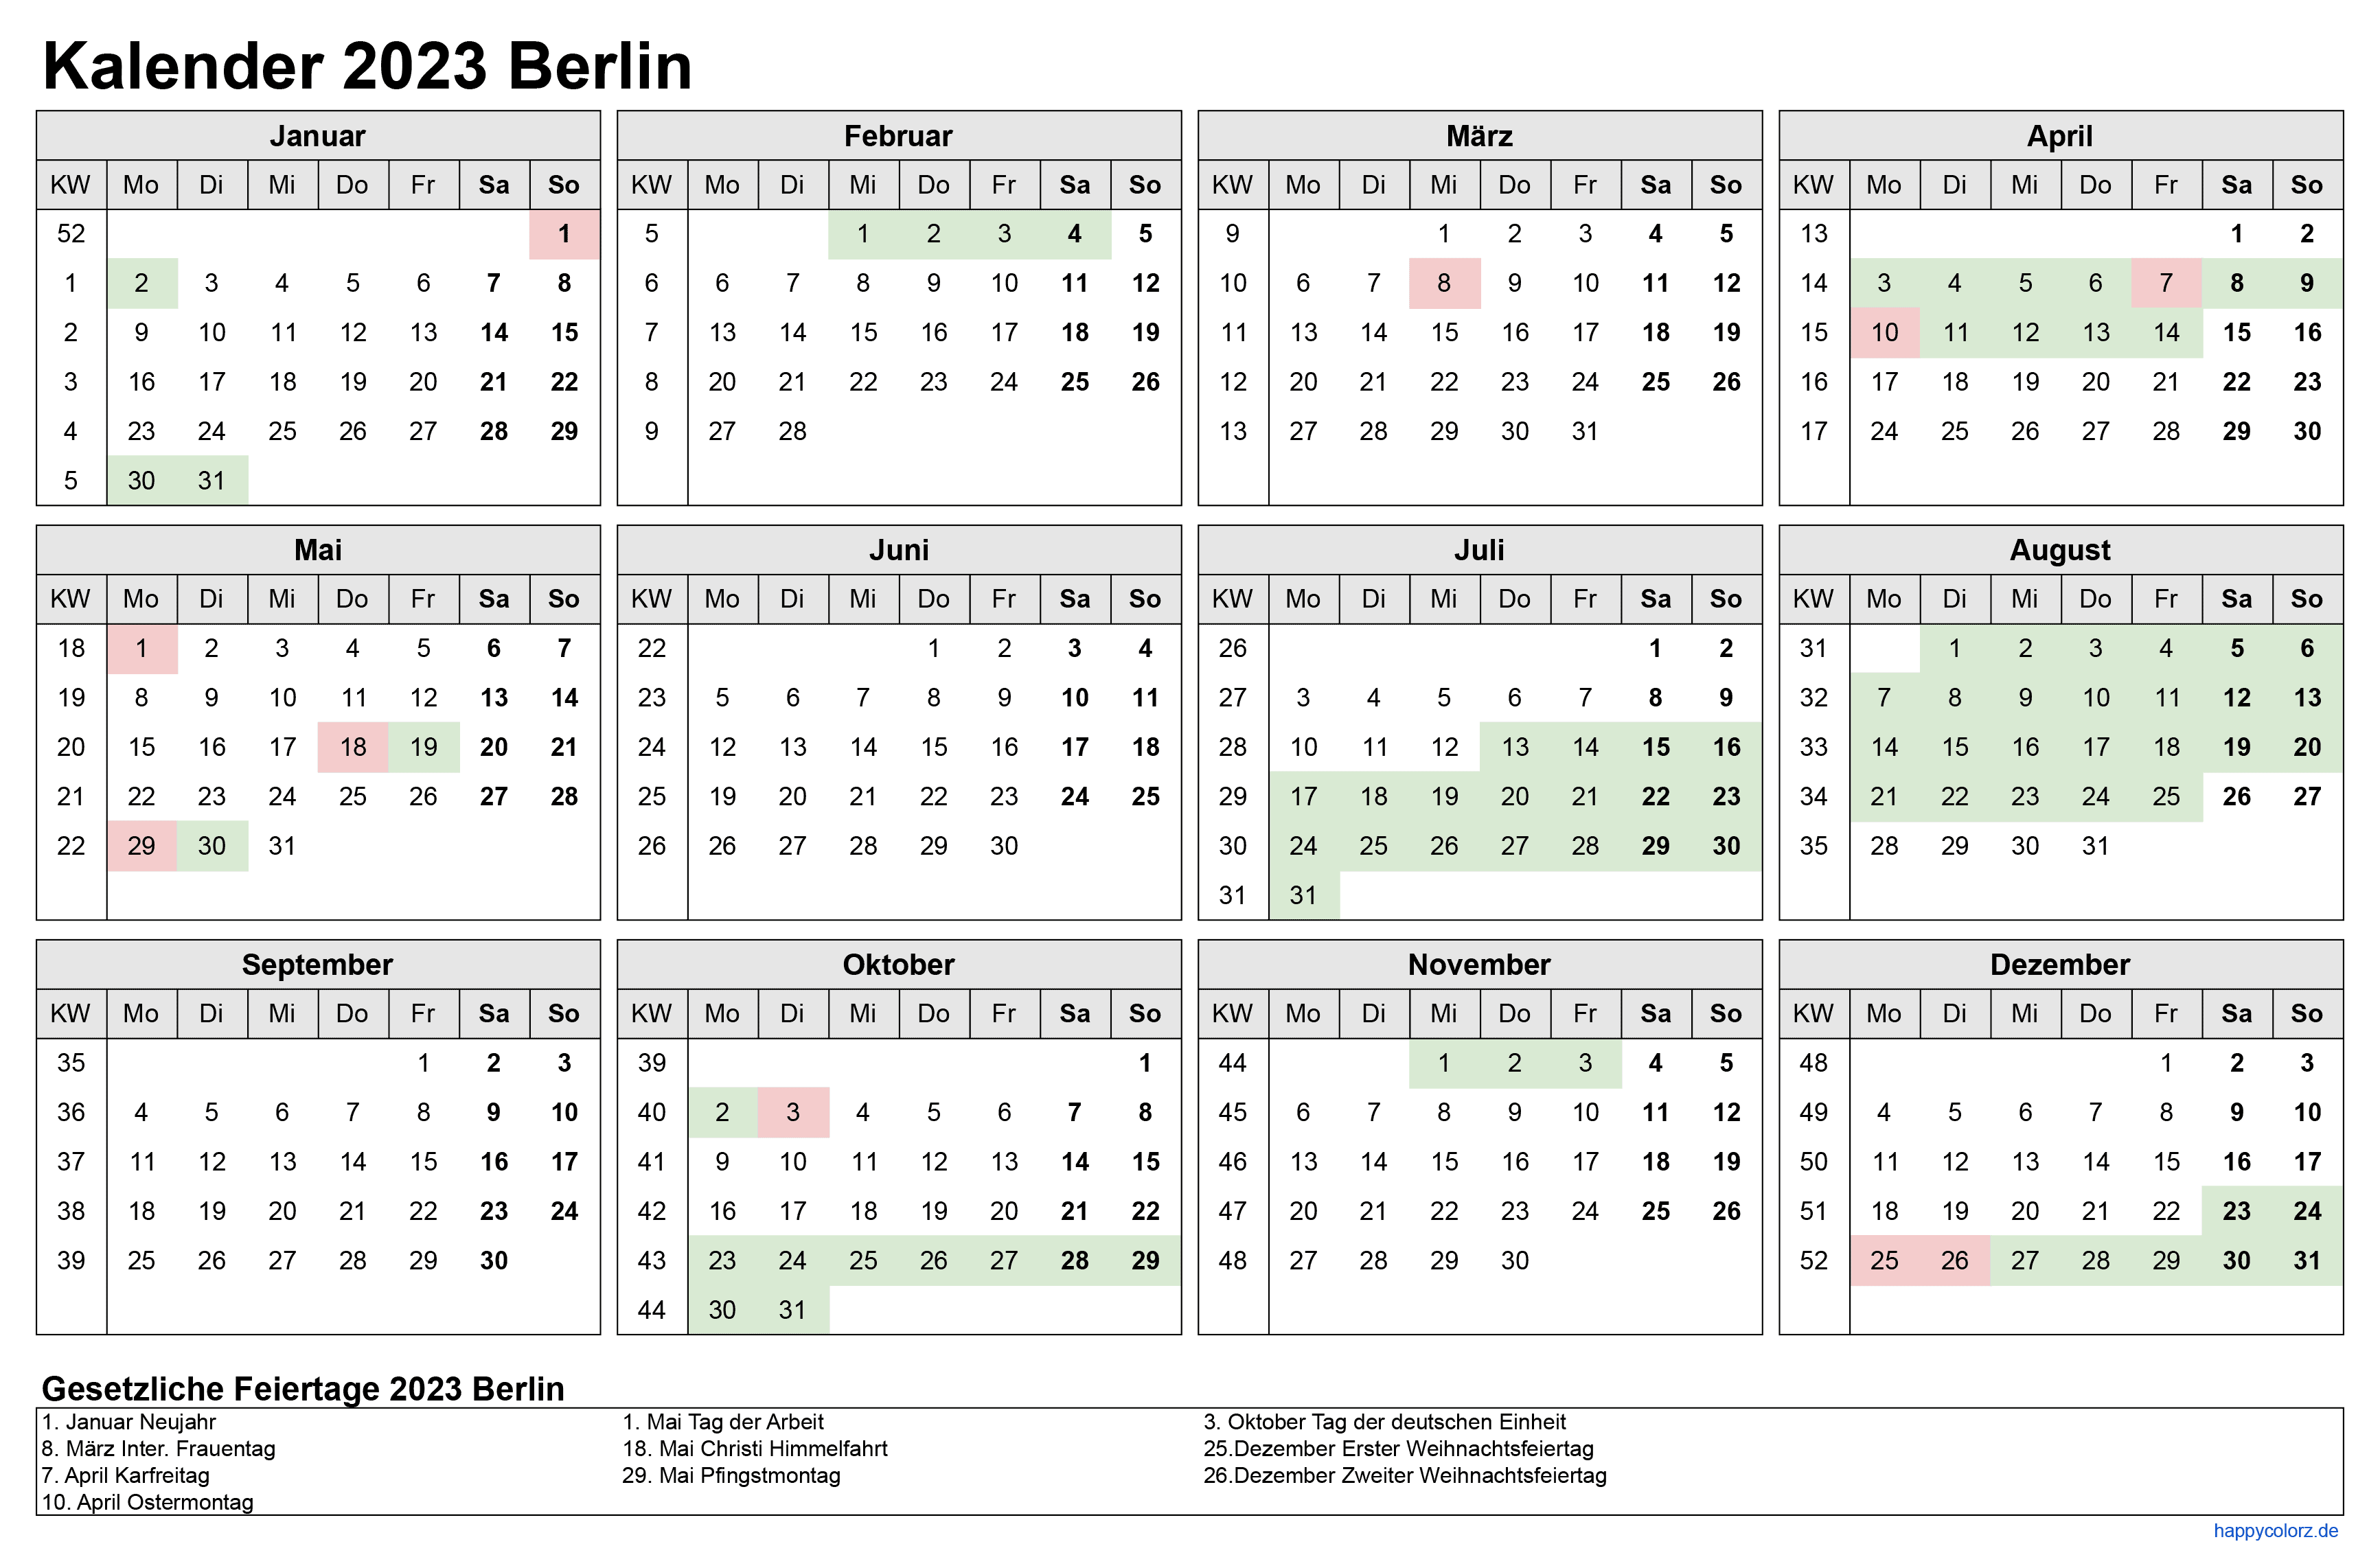 Kalender 2023 Berlin zum Ausdrucken